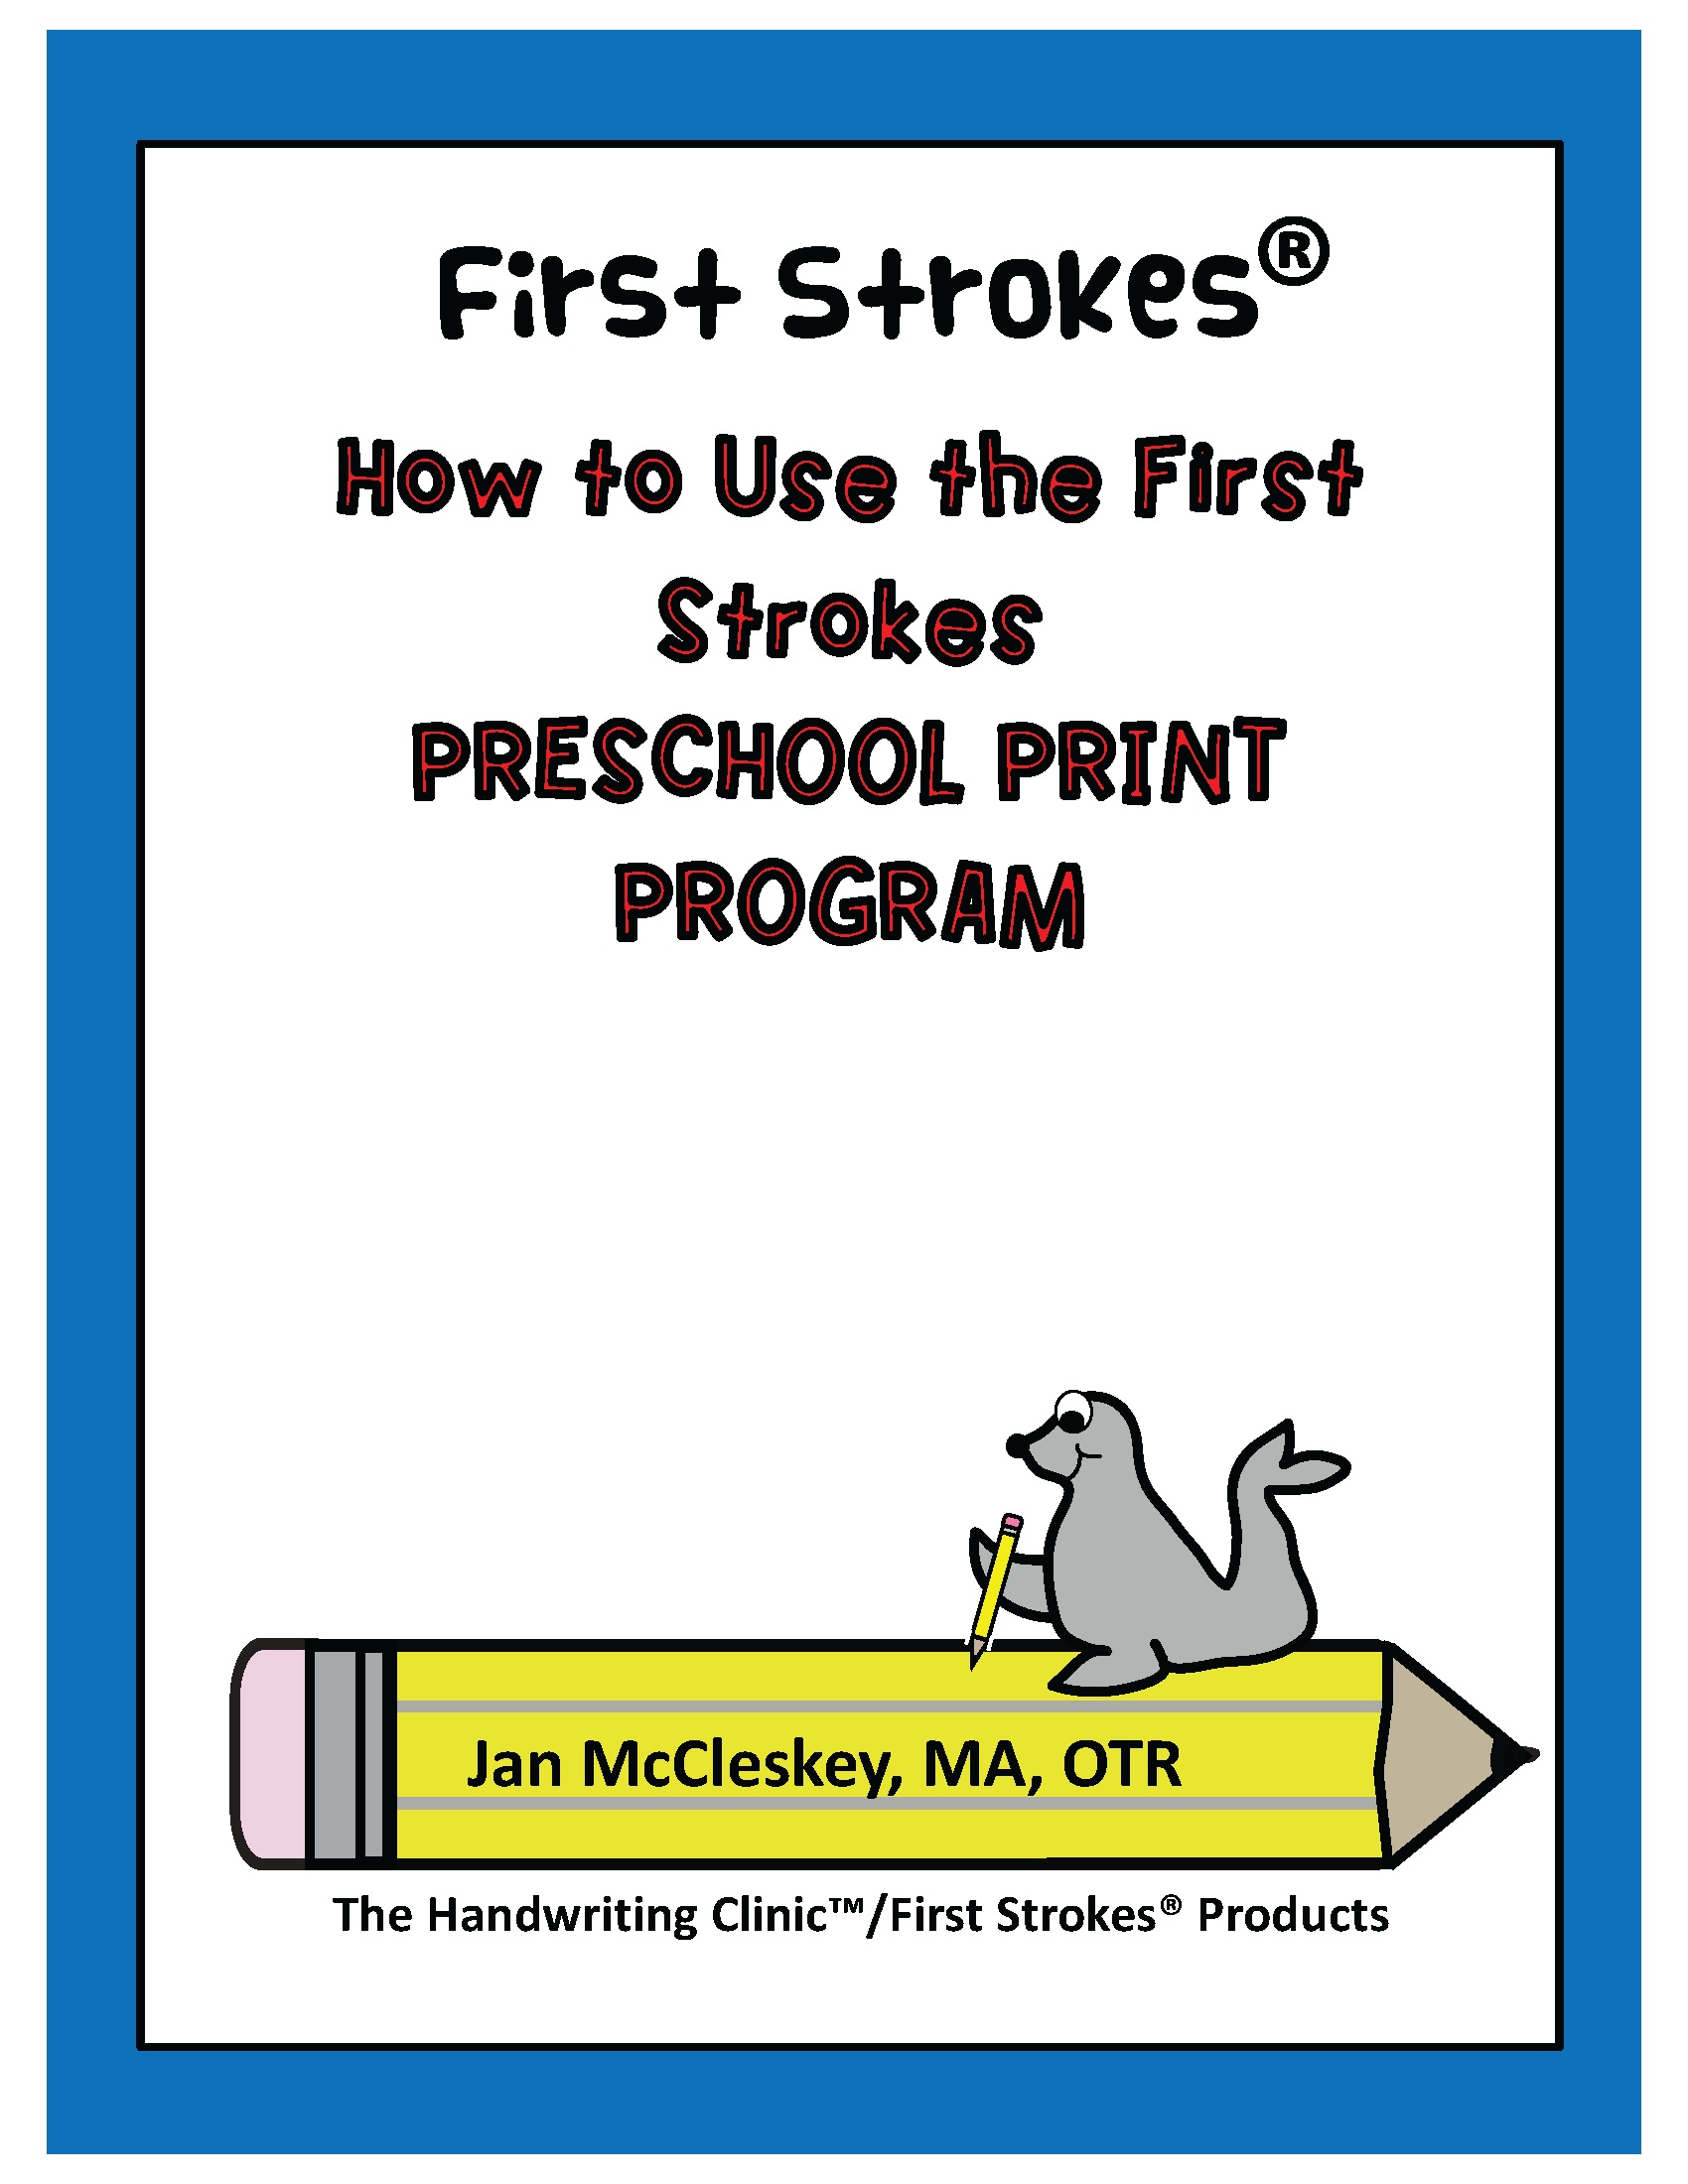 FS How to Use the FS Preschool Print Program